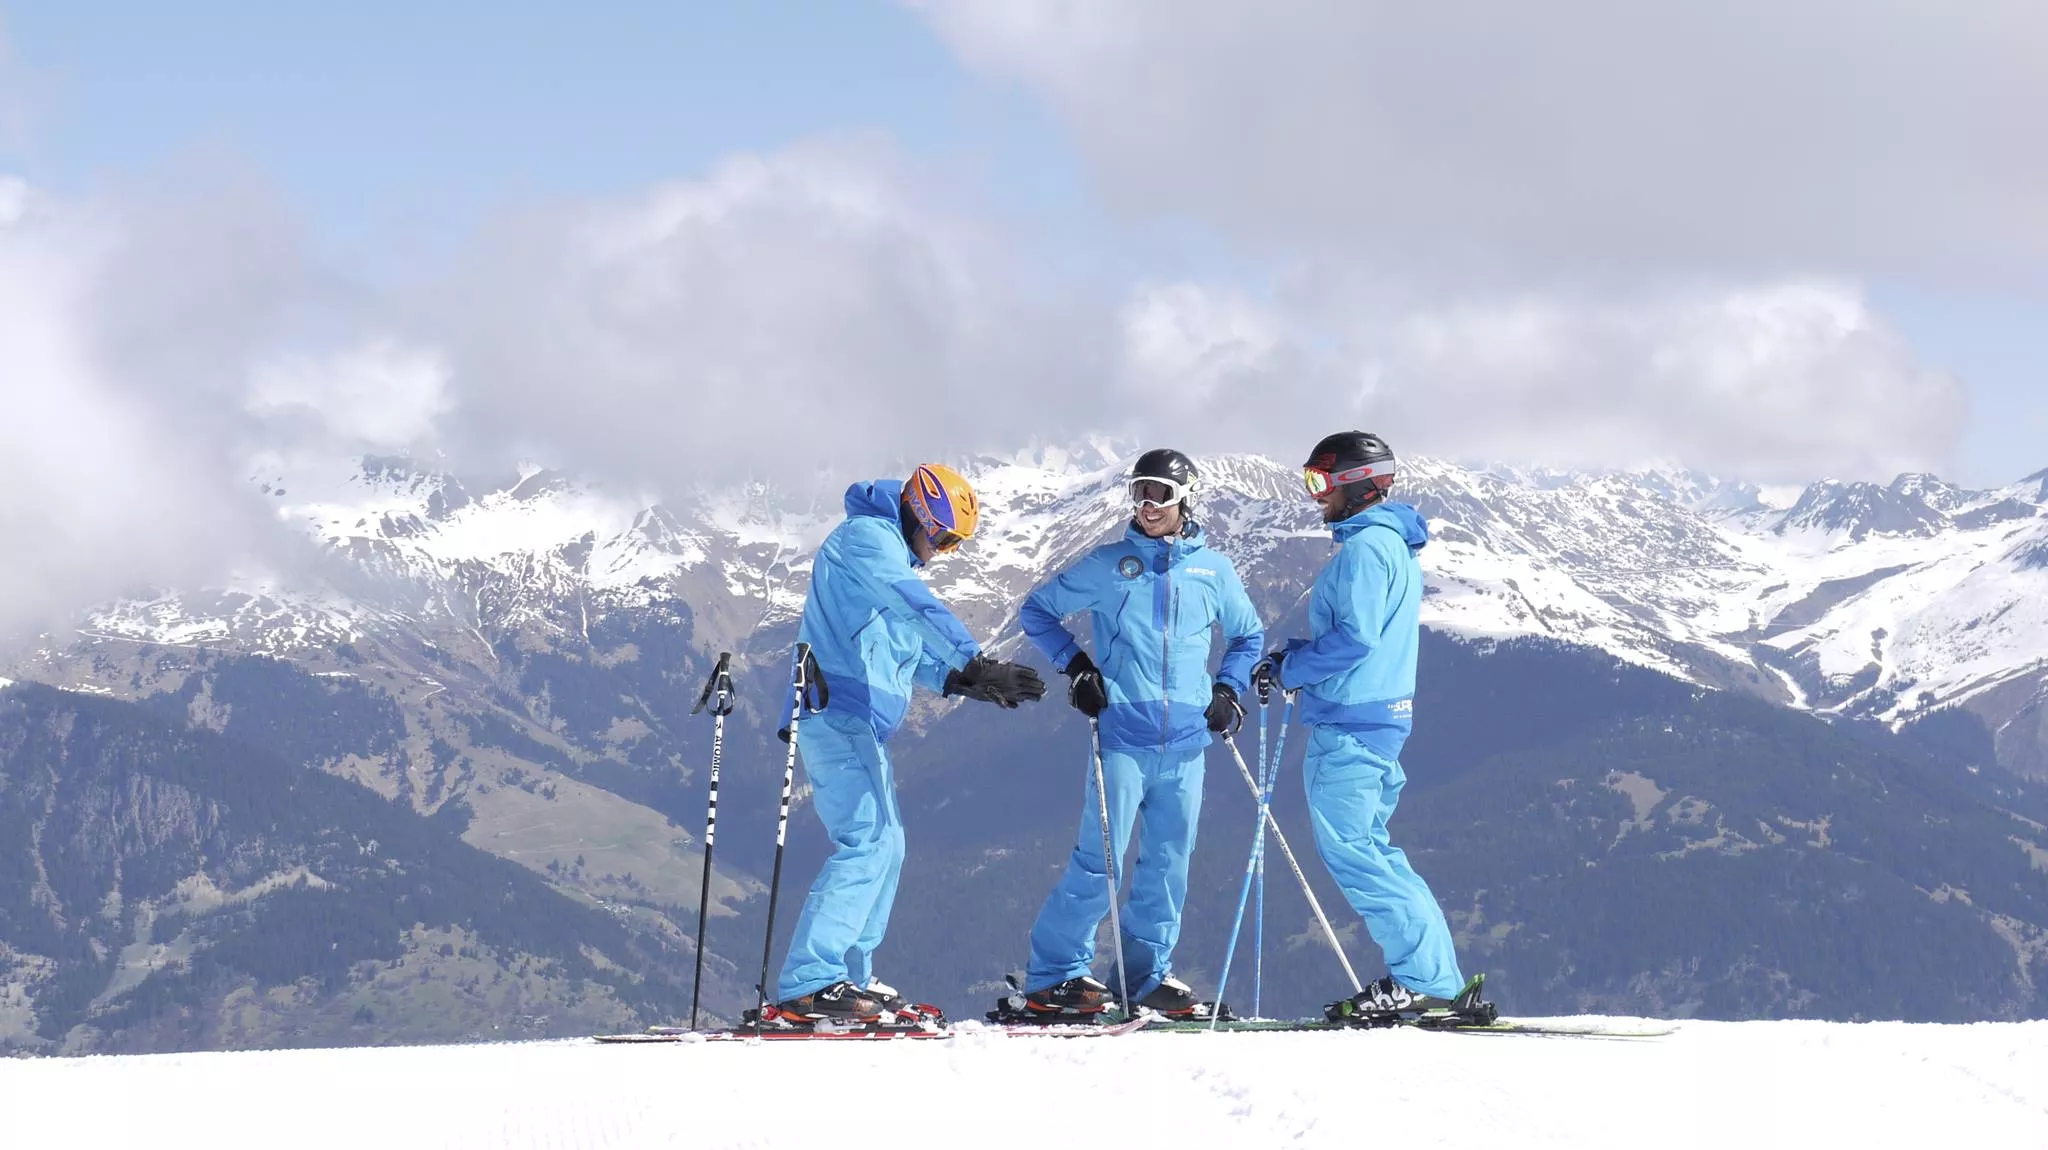 Ski School in France, Europe | Snowboarding,Skiing - Rated 0.5